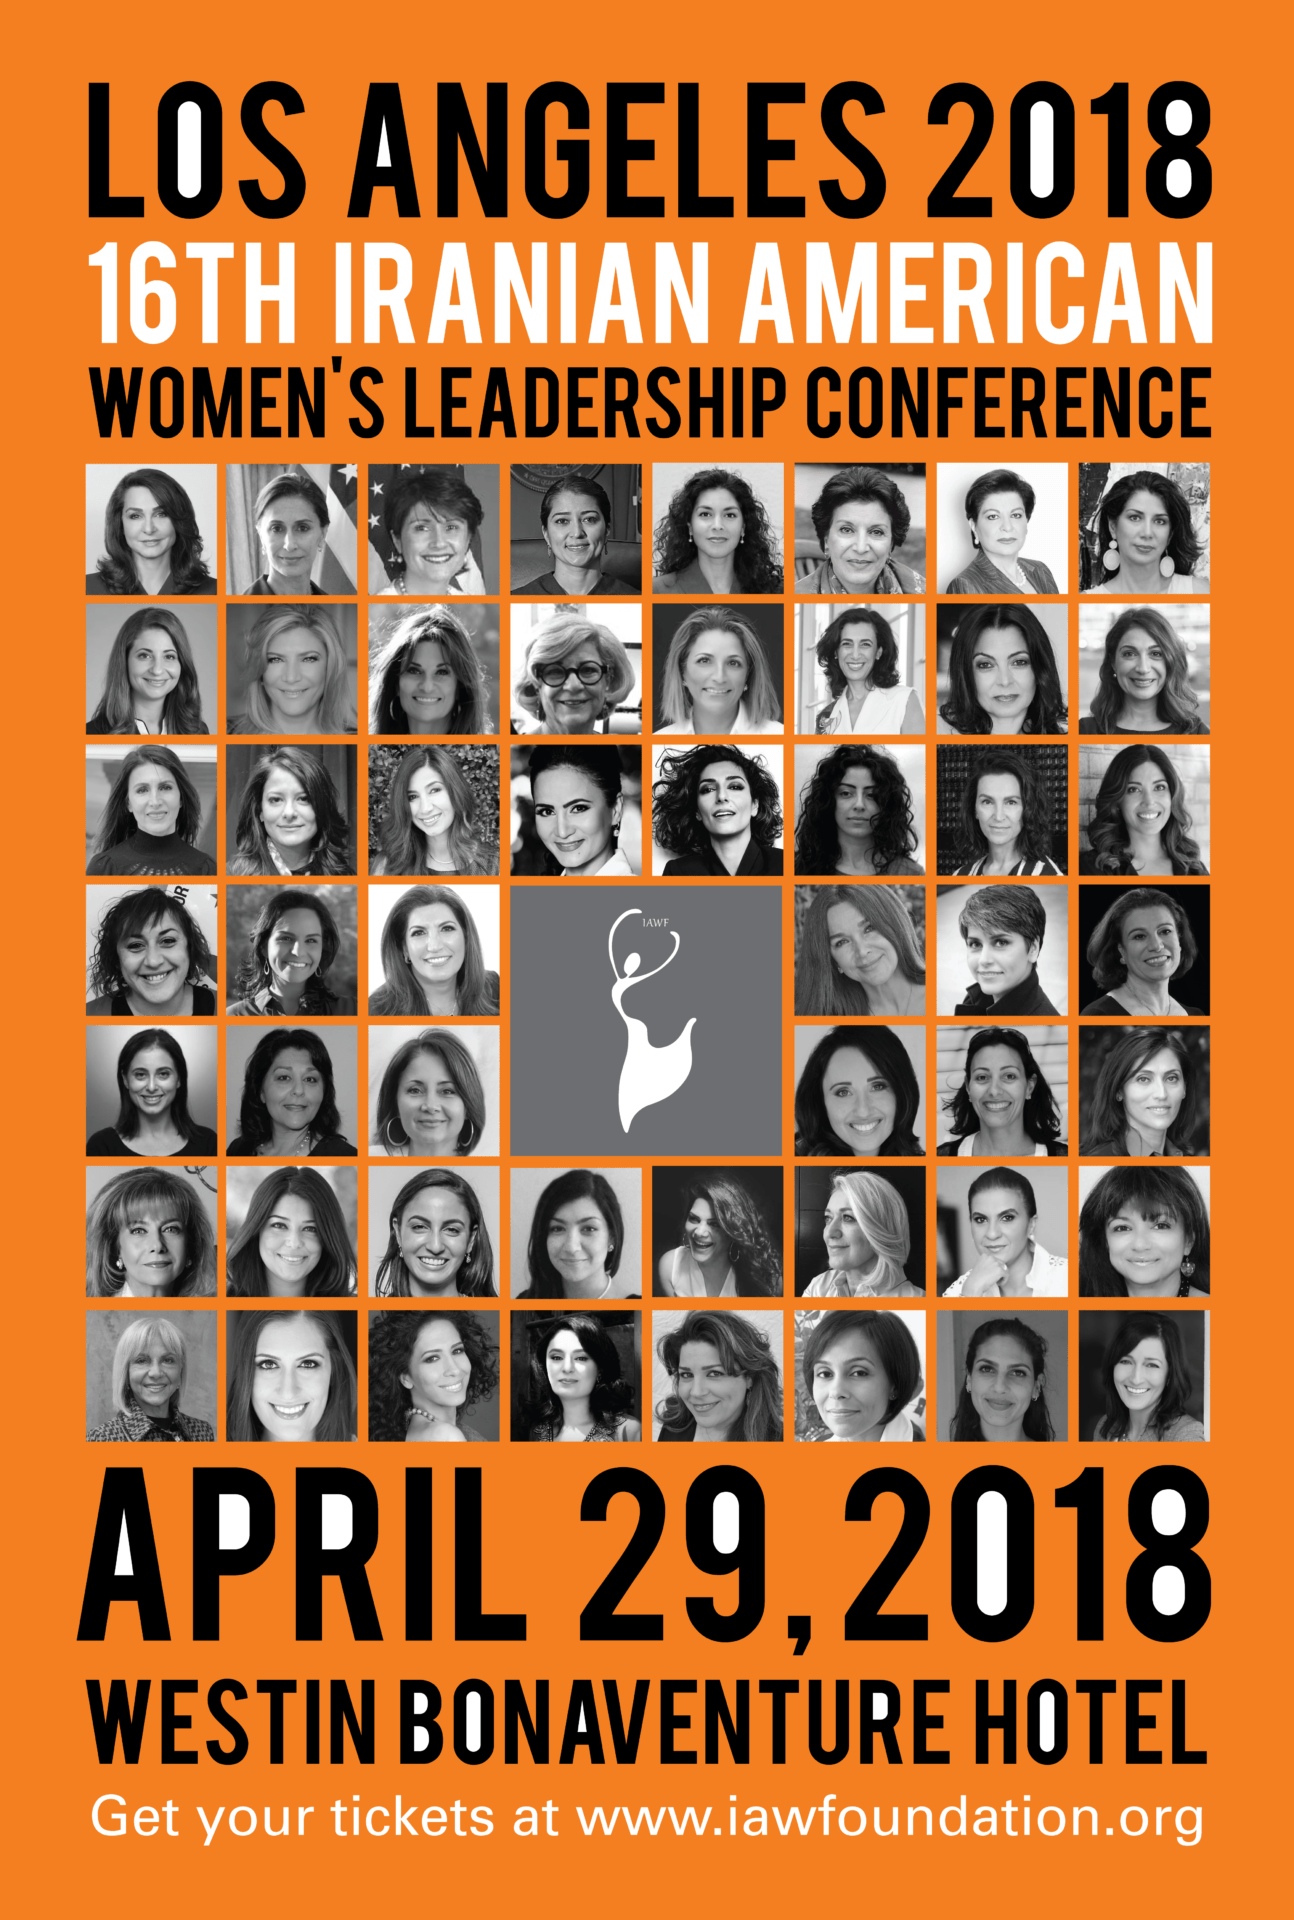 Iranian American Women’s Leadership Conference Speaker – Mariam Komeili